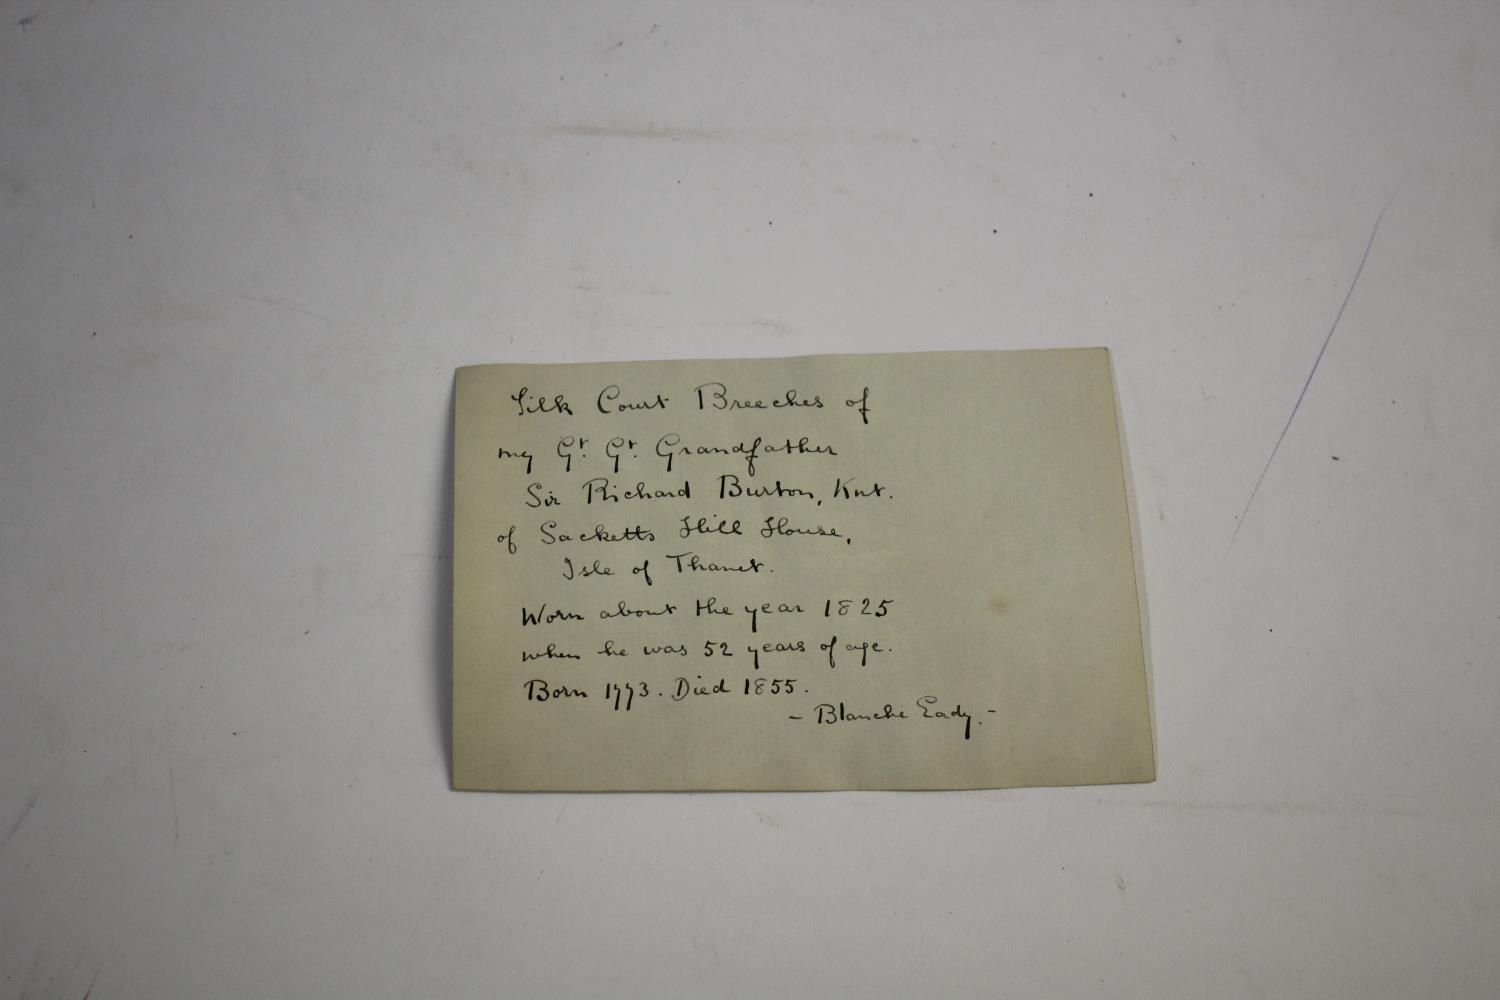 EARLY 19THC SILK COURT BREECHES circa 1825, a pair of silk breeches worn by Sir Robert Burton of - Image 5 of 5